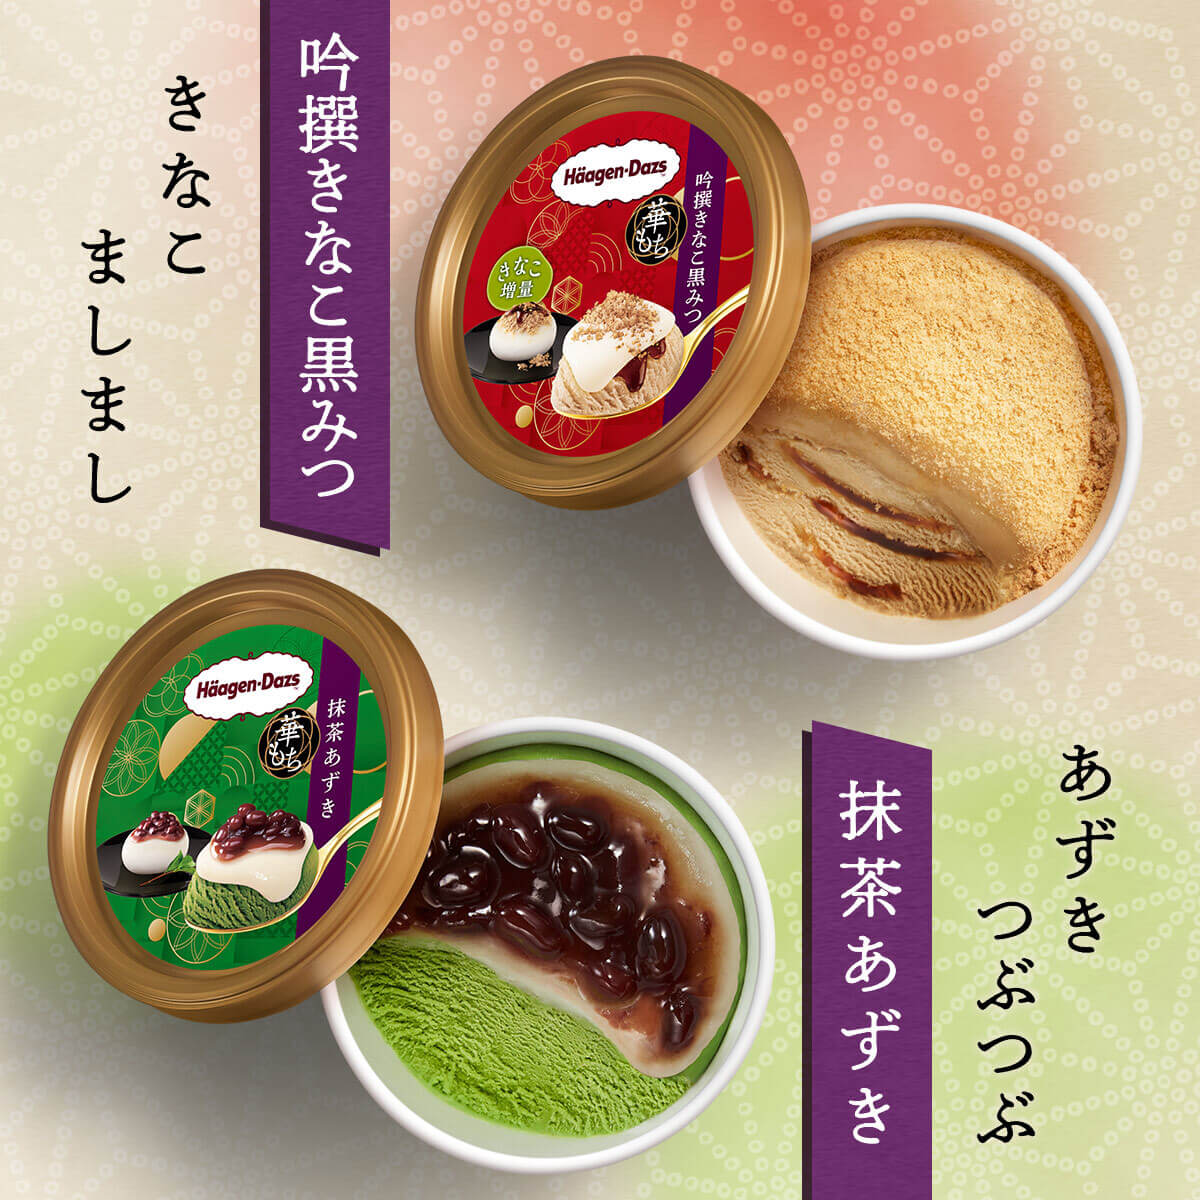 Beverages / Food, Simple, Luxurious / Elegant, Sizzle / Sensual, Japanese-style Banner Designs